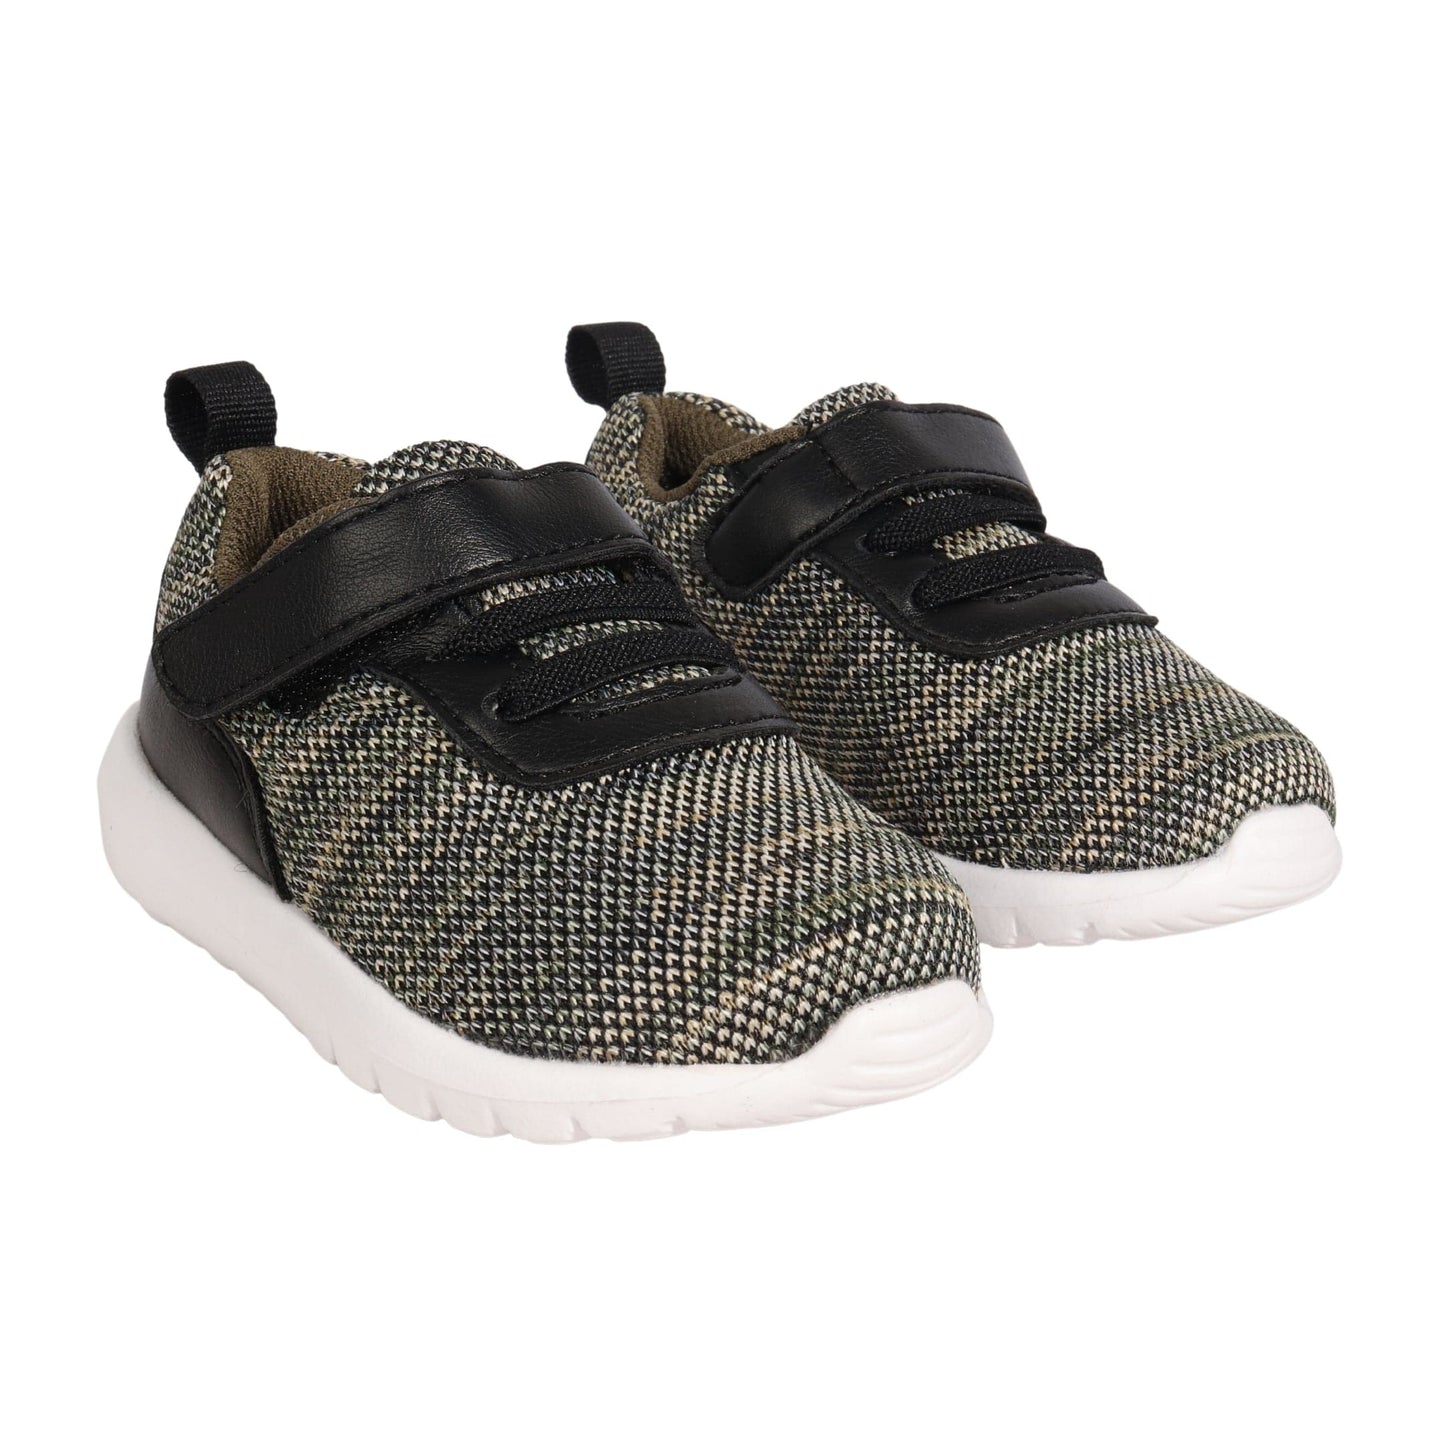 SKYWHEEL Baby Shoes 22 / Multi-Color SKYWHEEL - Baby - Lightweight Breathable Sneakers